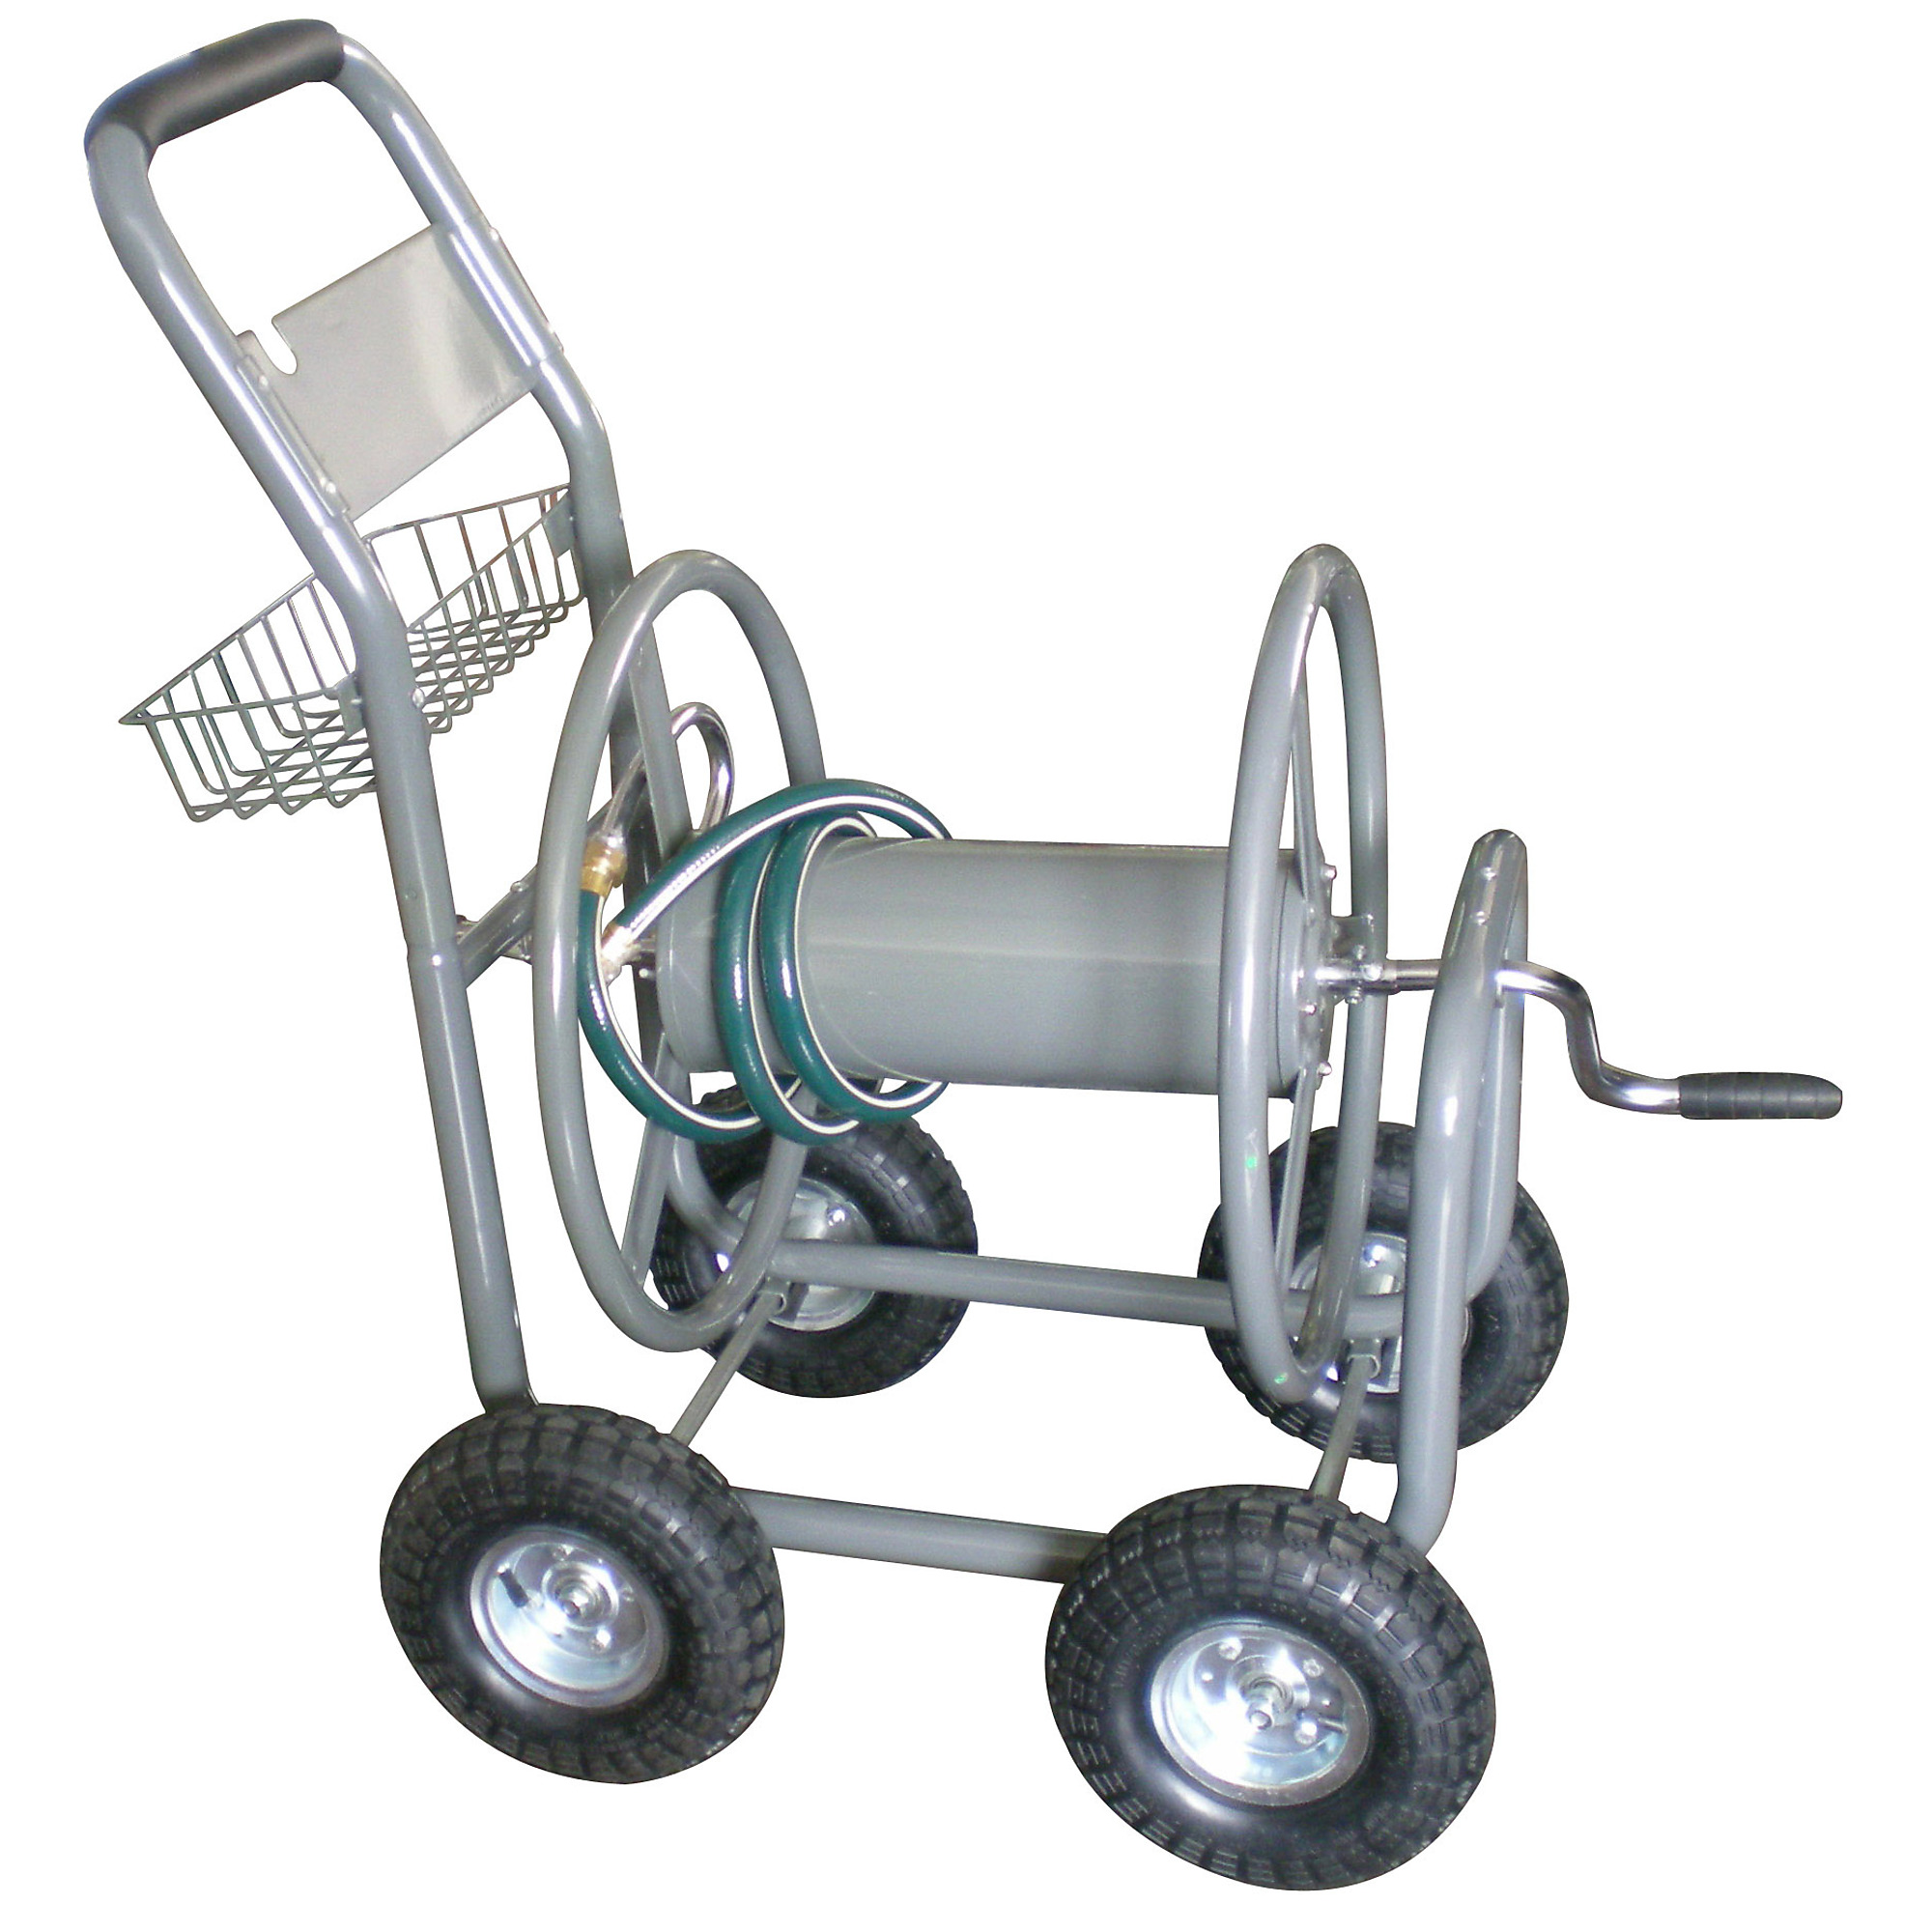 Yard Tuff, Hose Reel Cart, Hose Length Capacity 300 ft, Color Gray, Model YTF-30058PW